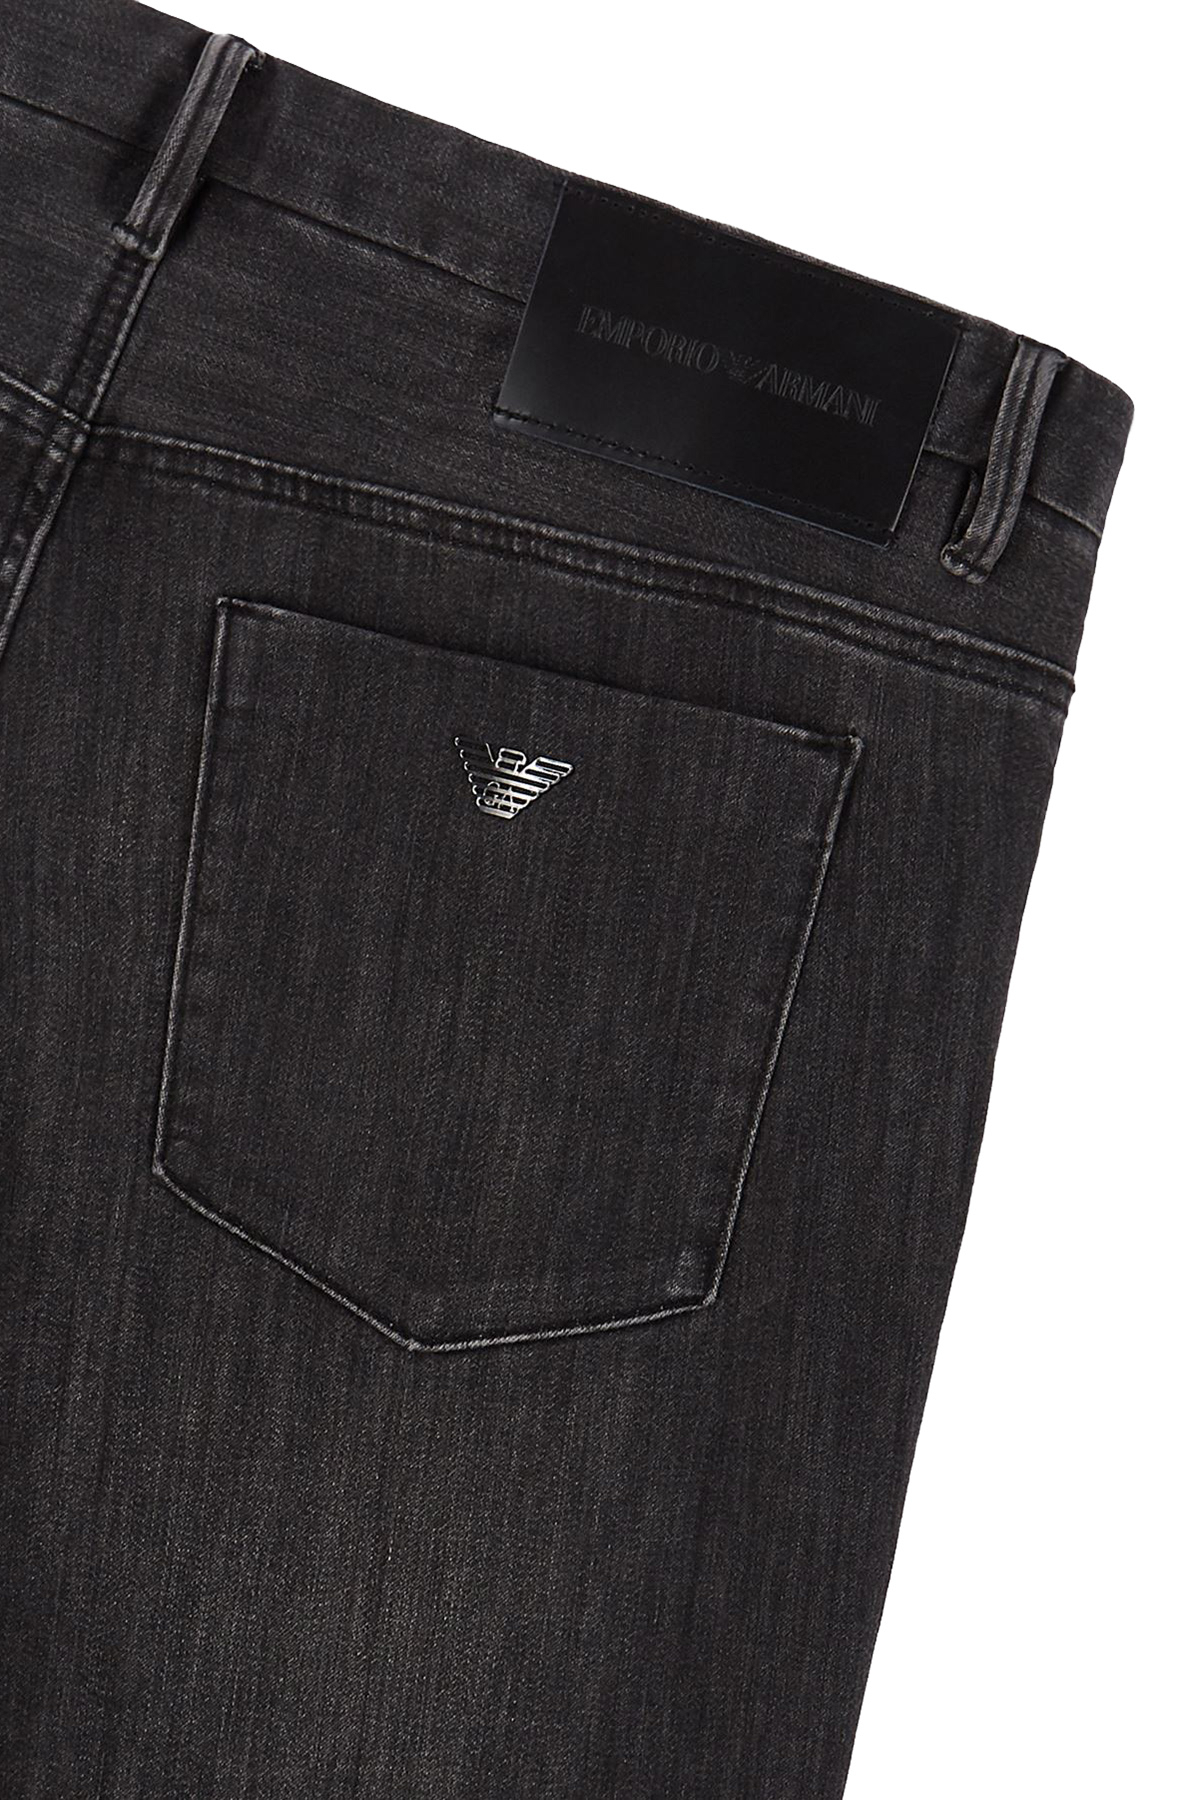 Emporio Armani Düşük Bel Extra Slim Fit J11 Jeans Erkek Kot Pantolon 3K1J11 1DHDZ 0006 SİYAH